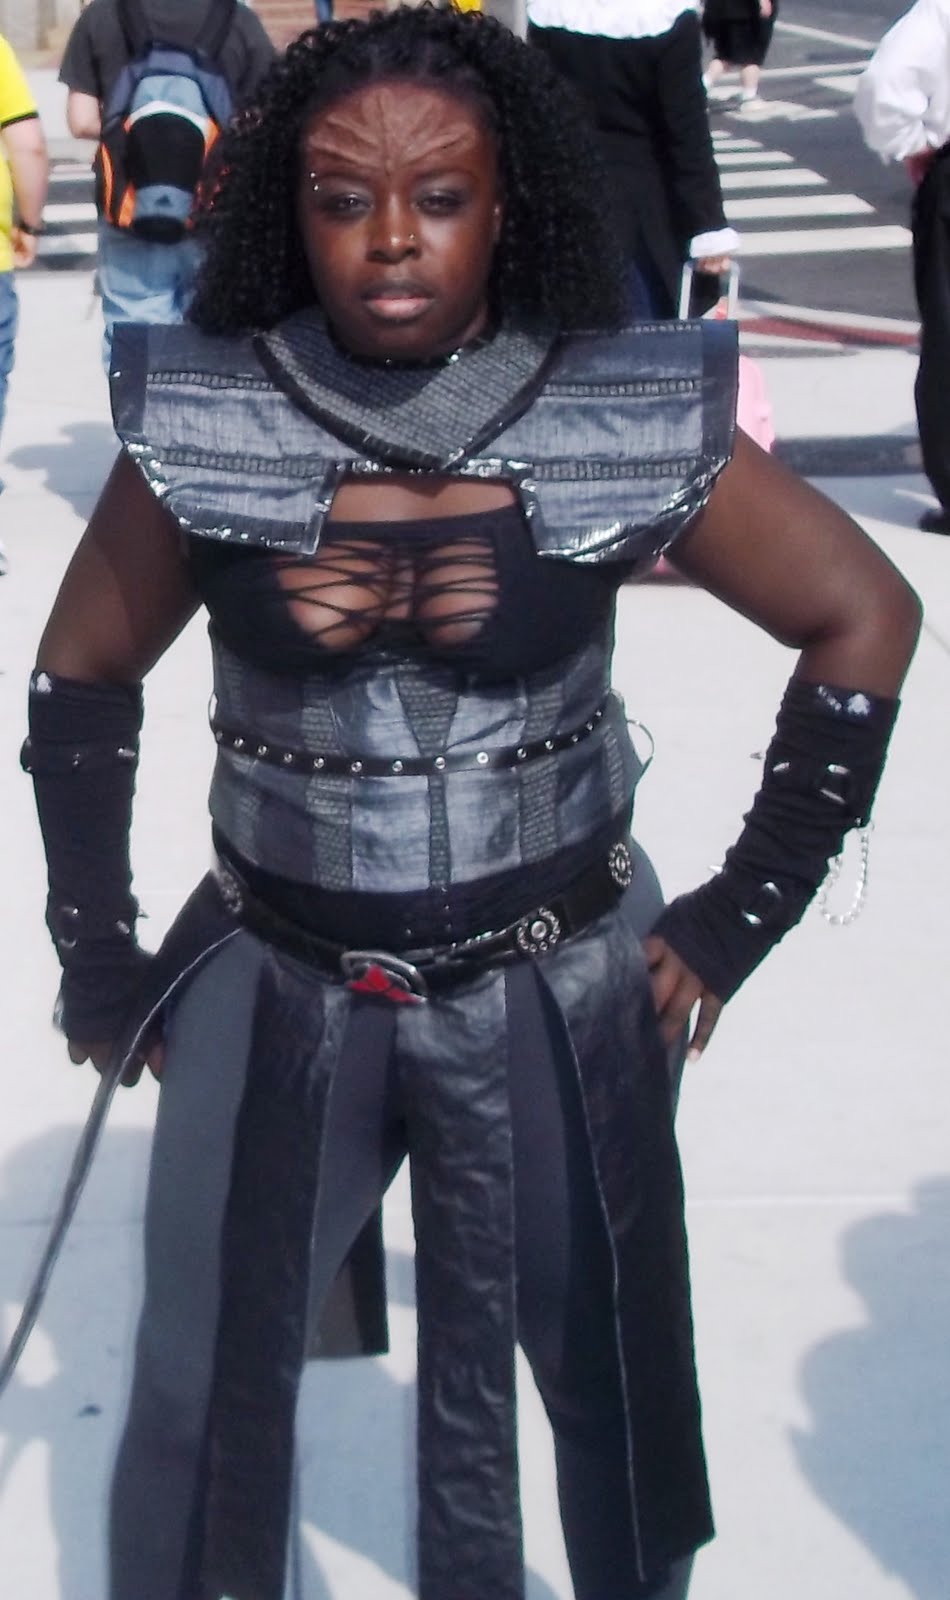 klingon costume male